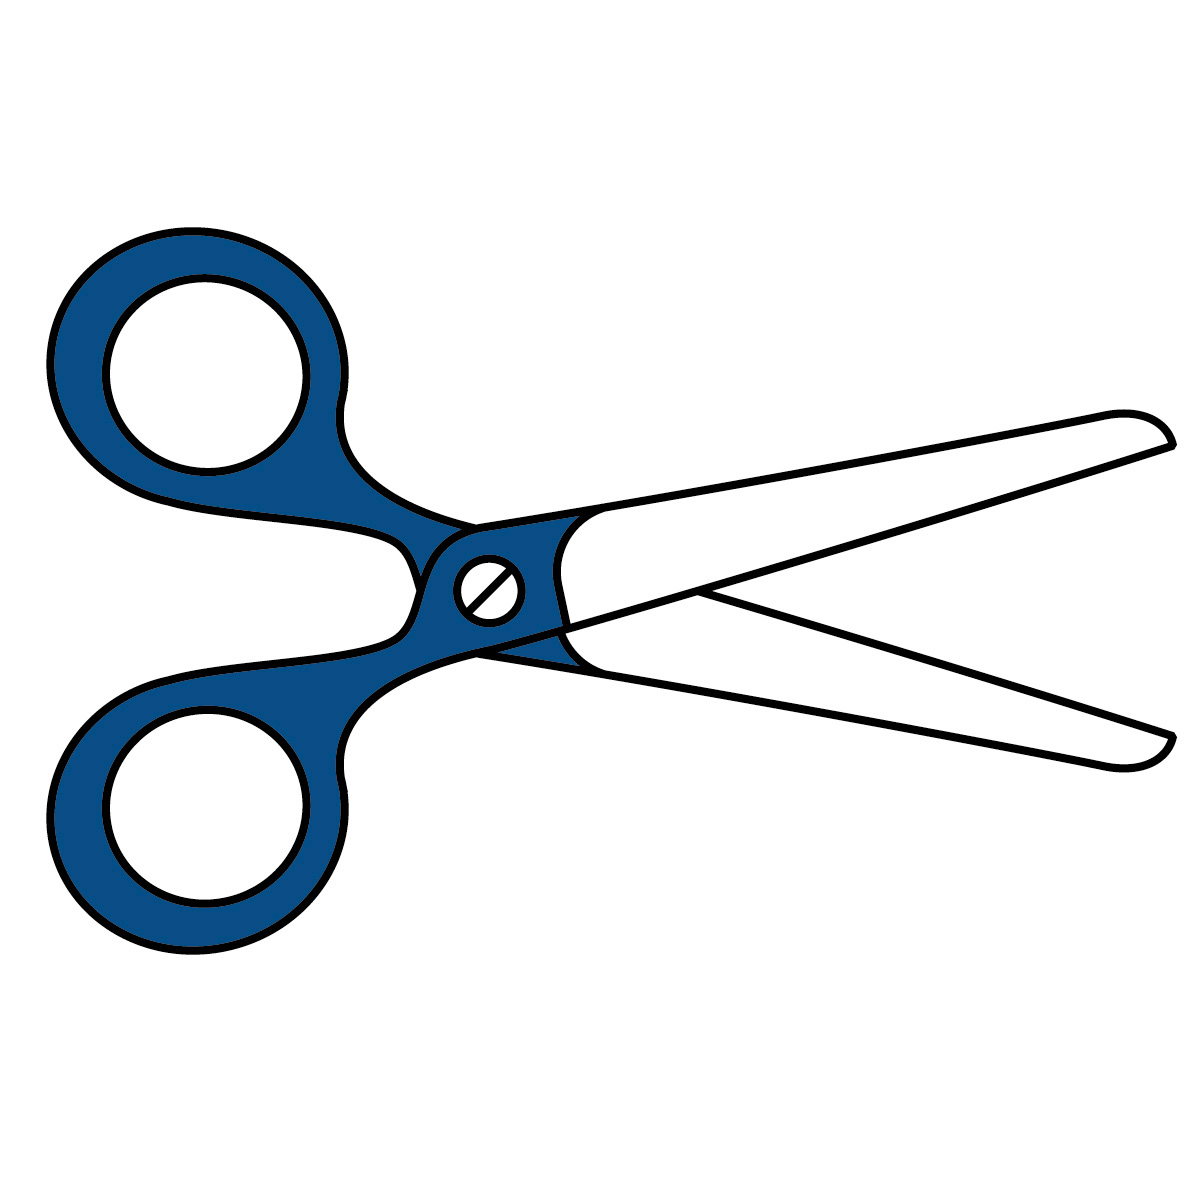 Scissors Drawing - ClipArt Best